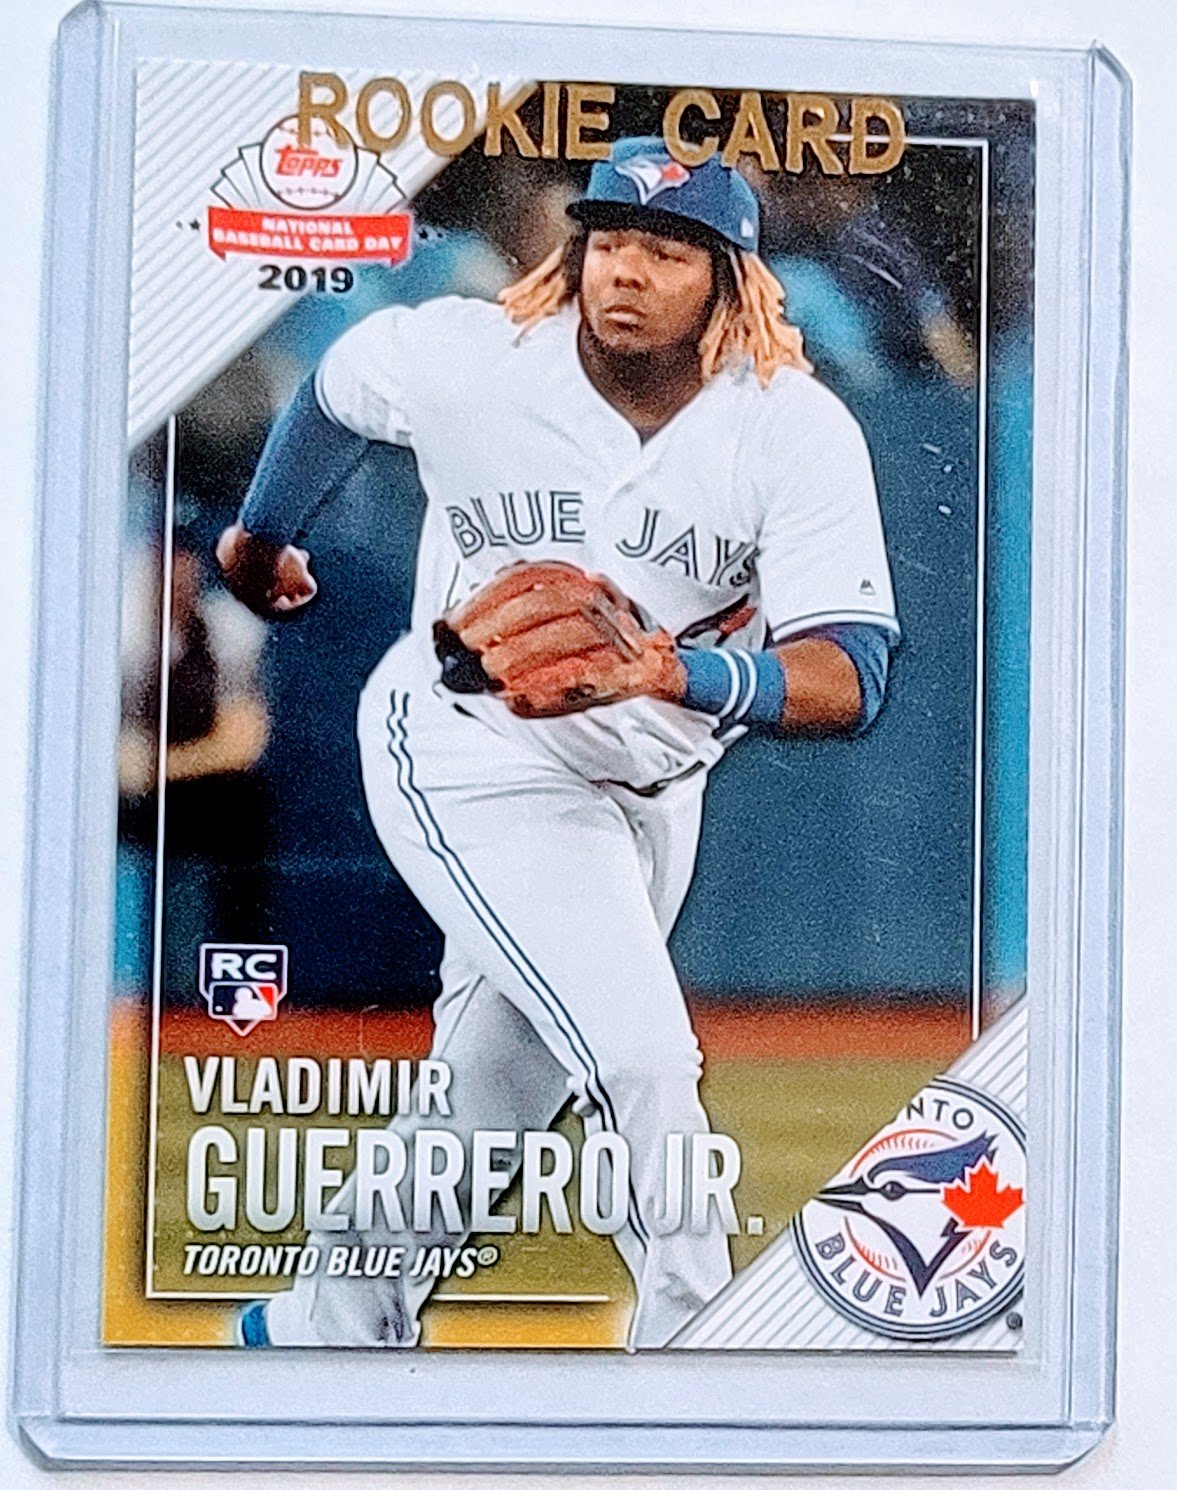 2019 Topps Vladimir Guerrero Jr National Baseball Card Day Baseball Card TPTV simple Xclusive Collectibles   